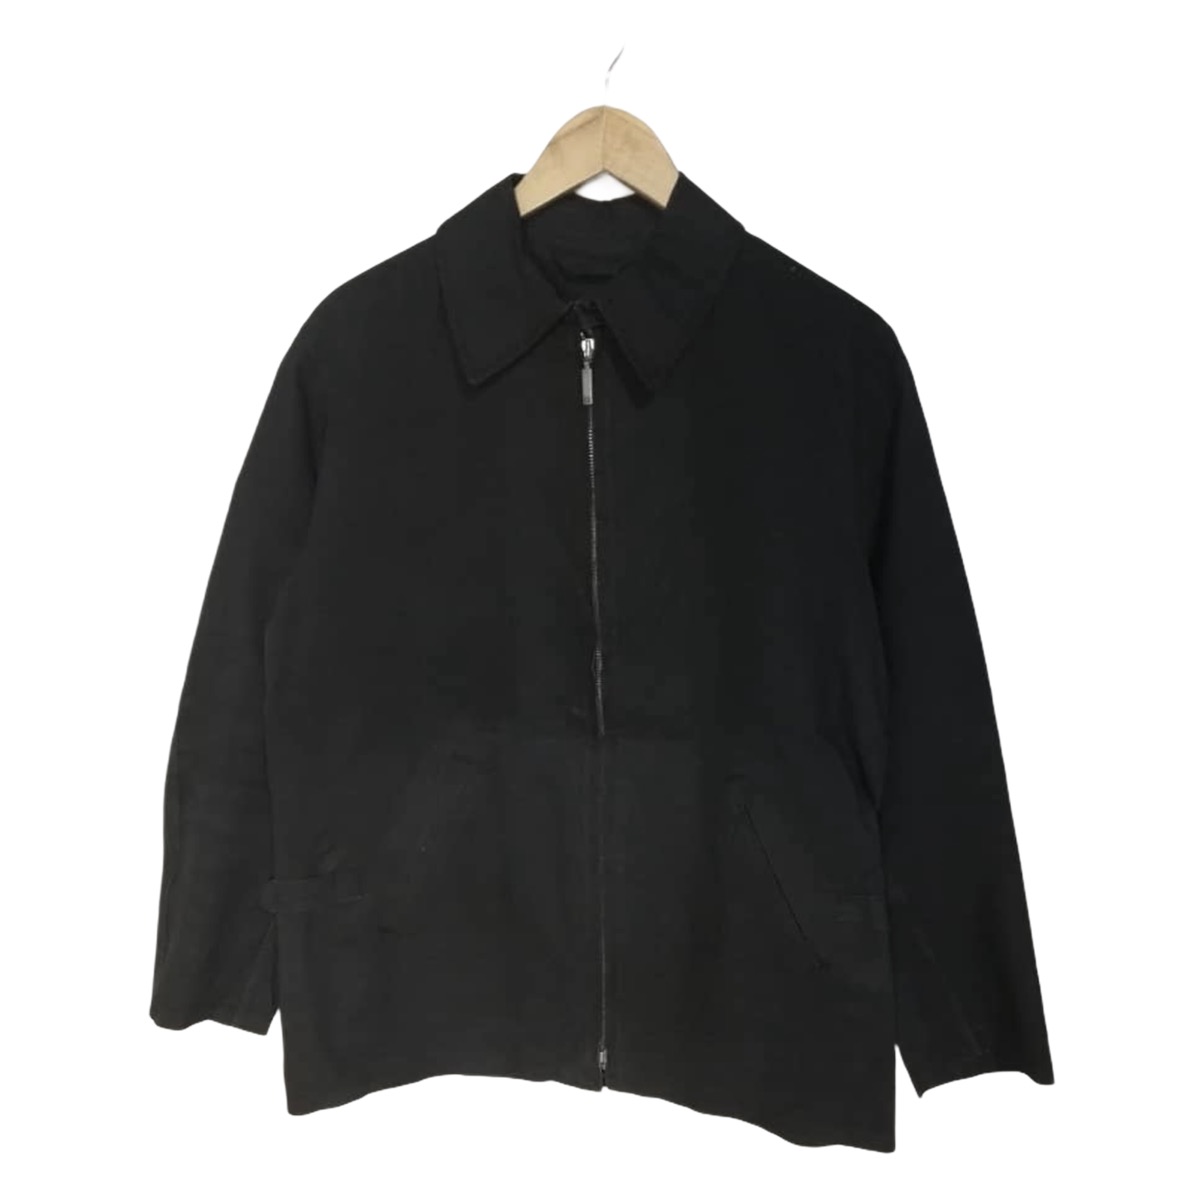 Mackintosh genuine handmade black zipper jacket - 1